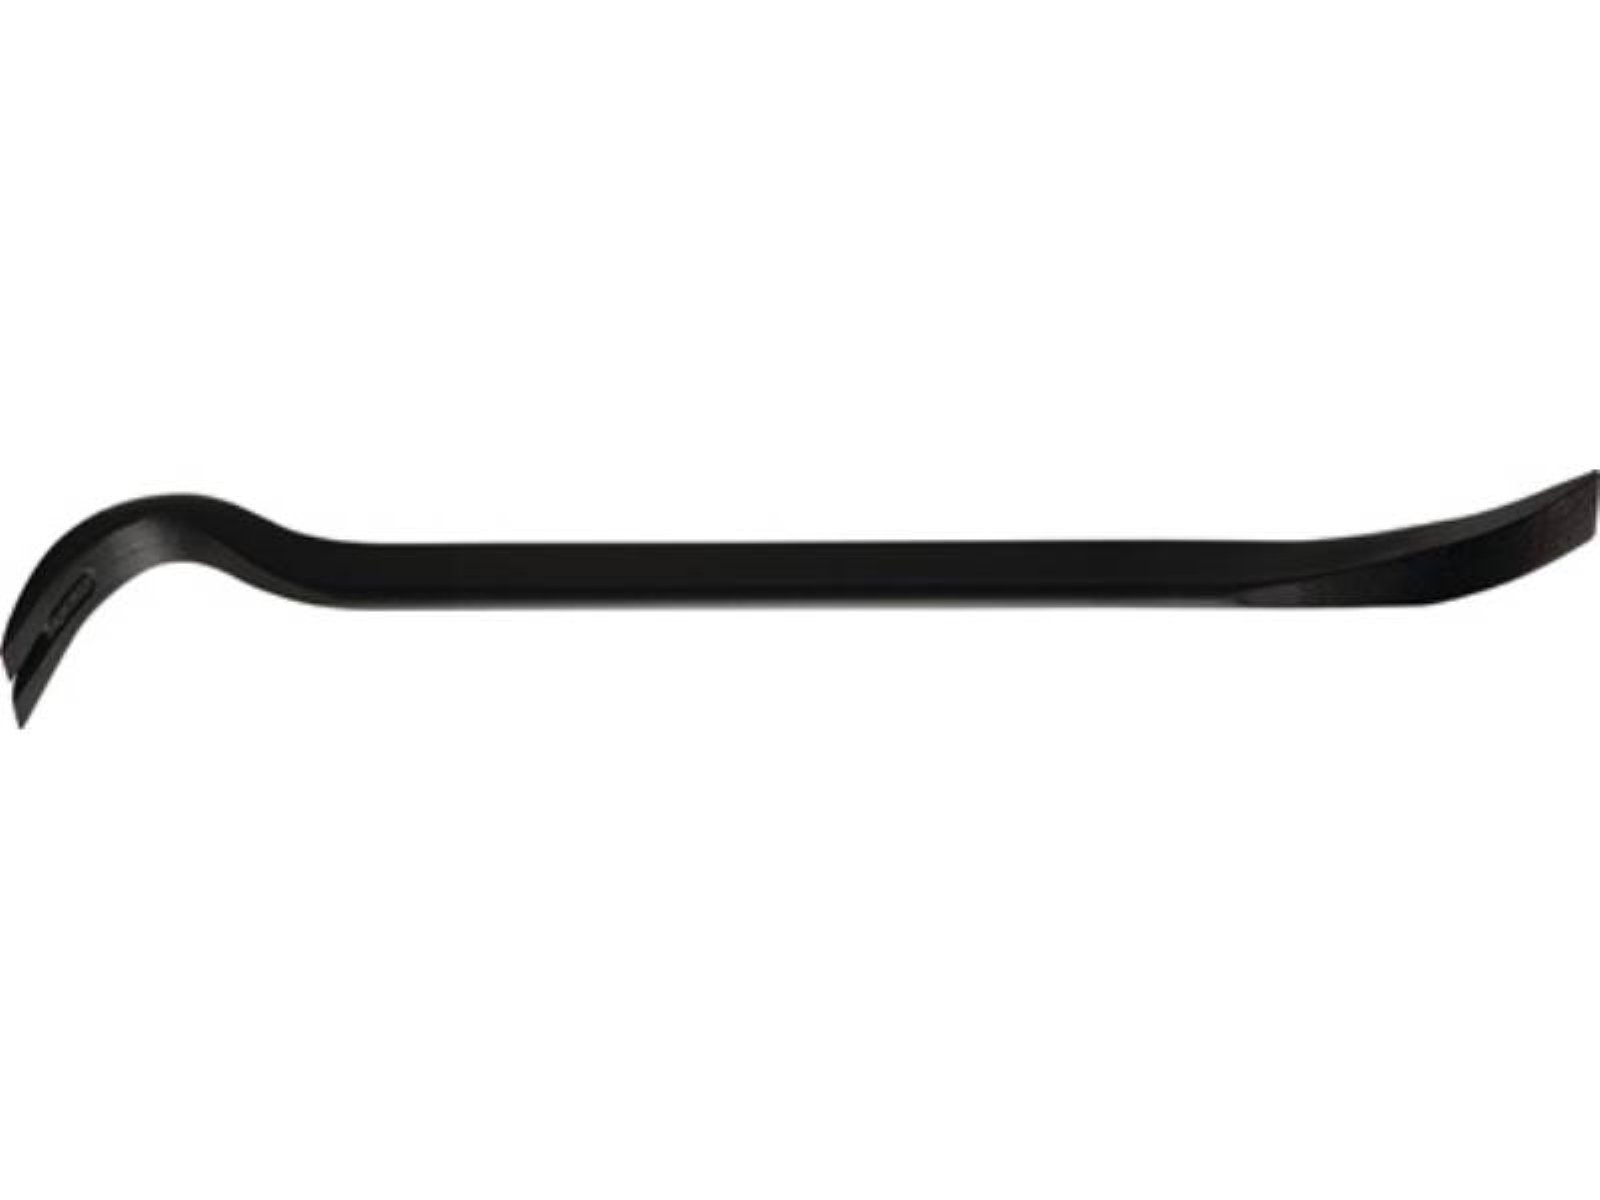 Peddinghaus Nageleisen Nageleisen Power Bar Gesamtlänge 1200 mm, ovaler Korpus ovale Form mi